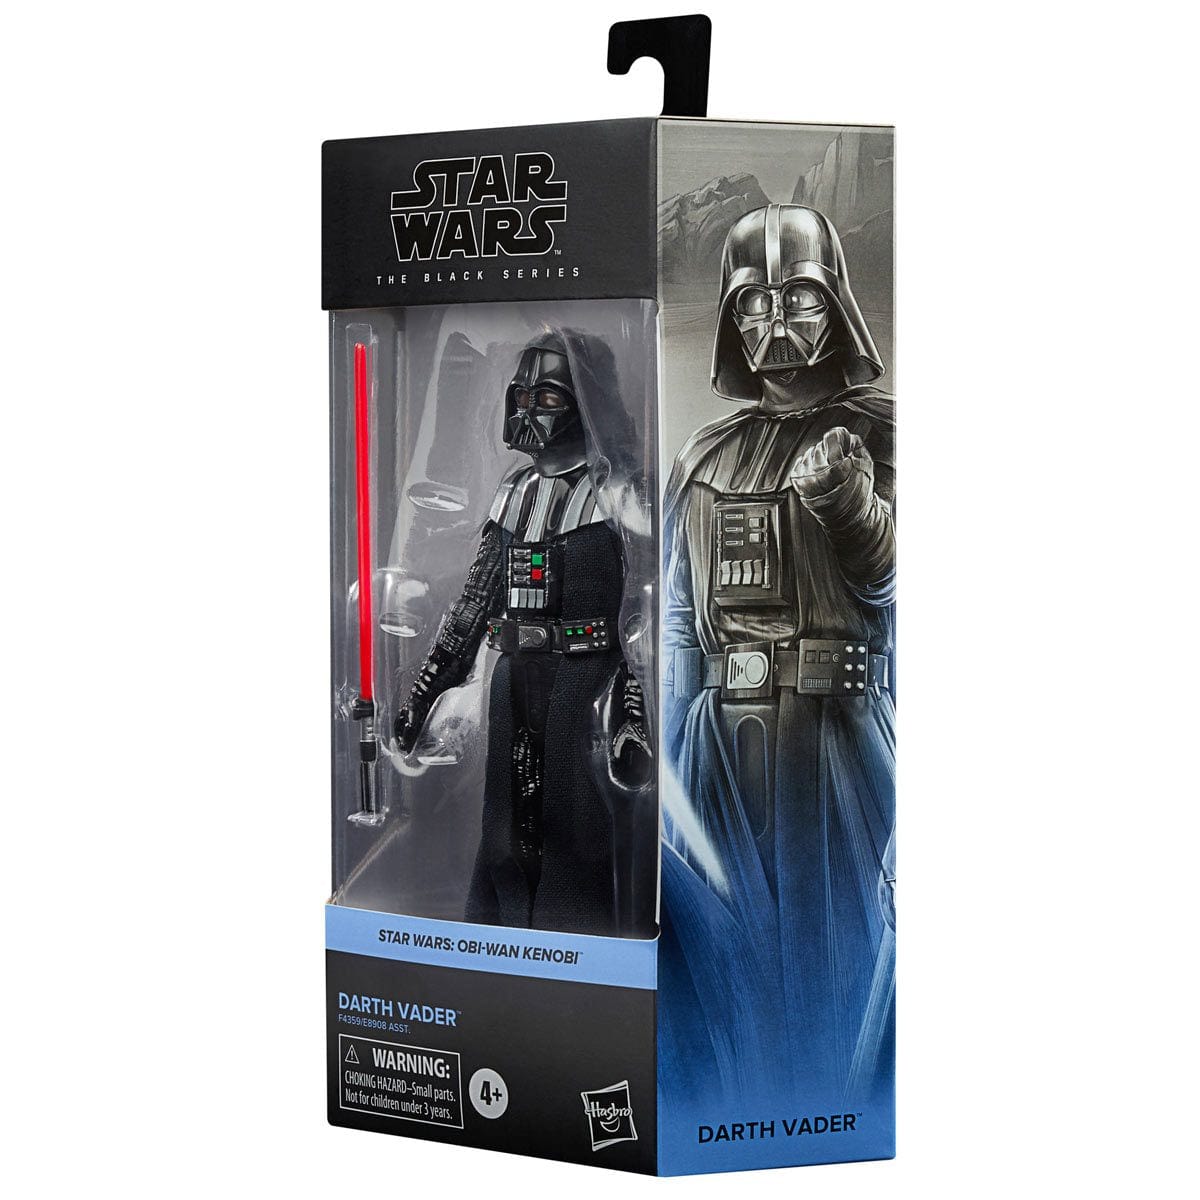 Star Wars The Black Series Darth Vader (Obi-Wan Kenobi) 6-Inch Action Figure Media Box Artwork